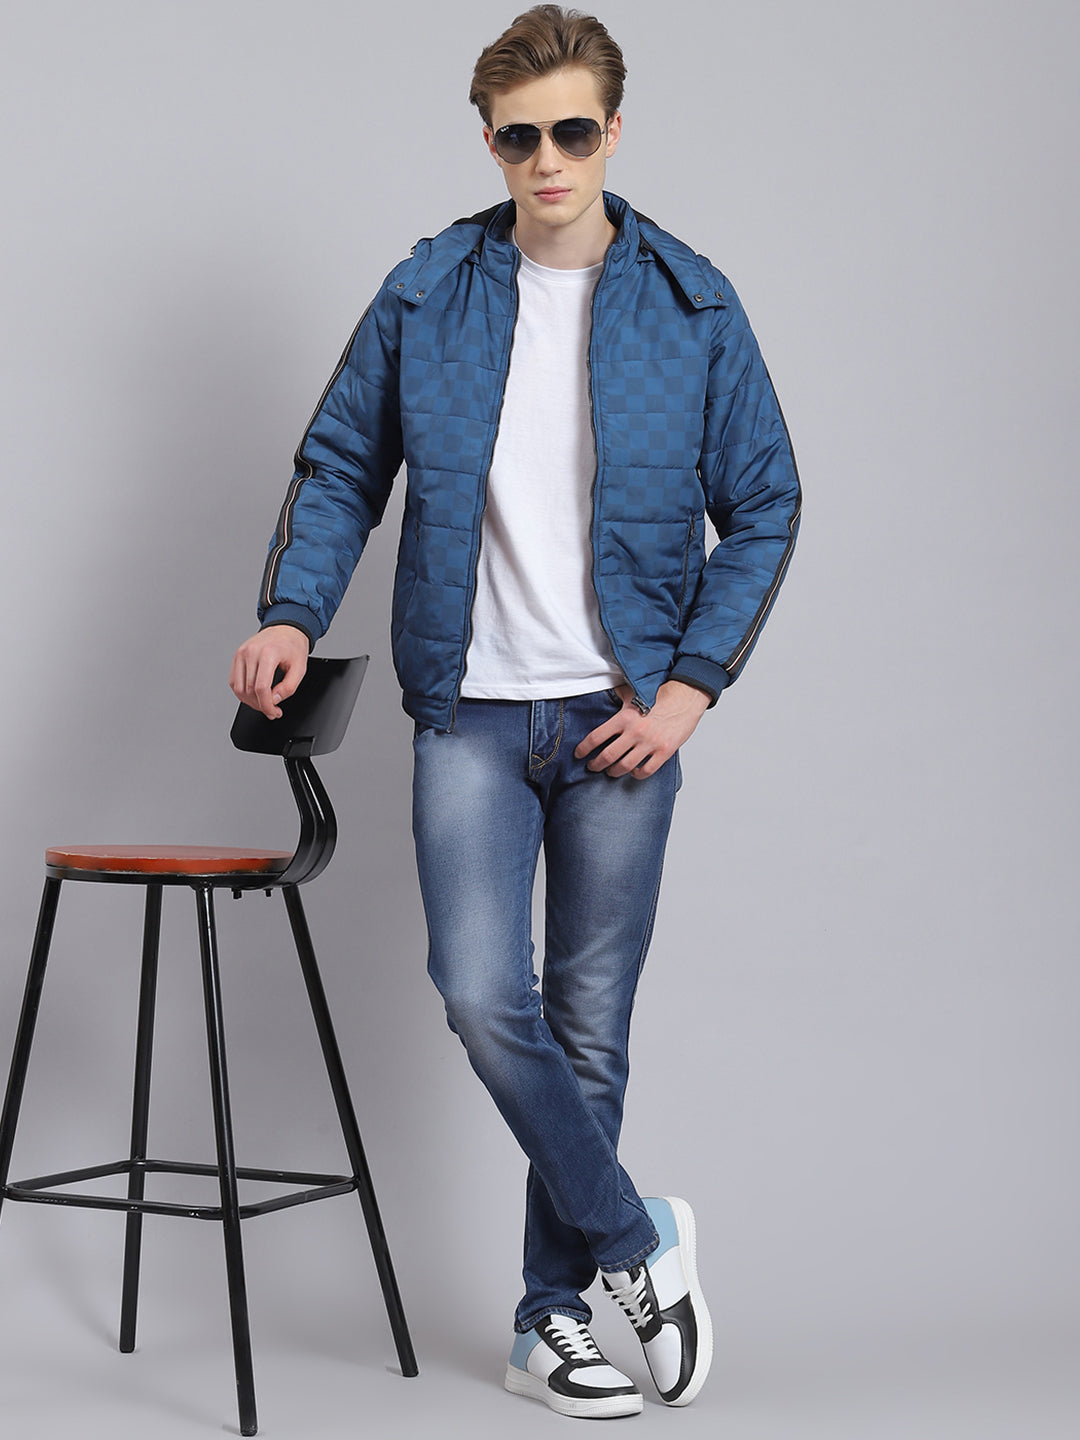 Denim jacket styling ideas || Trendy new ways to Wear a Kurtis with jean  jacket - YouTube